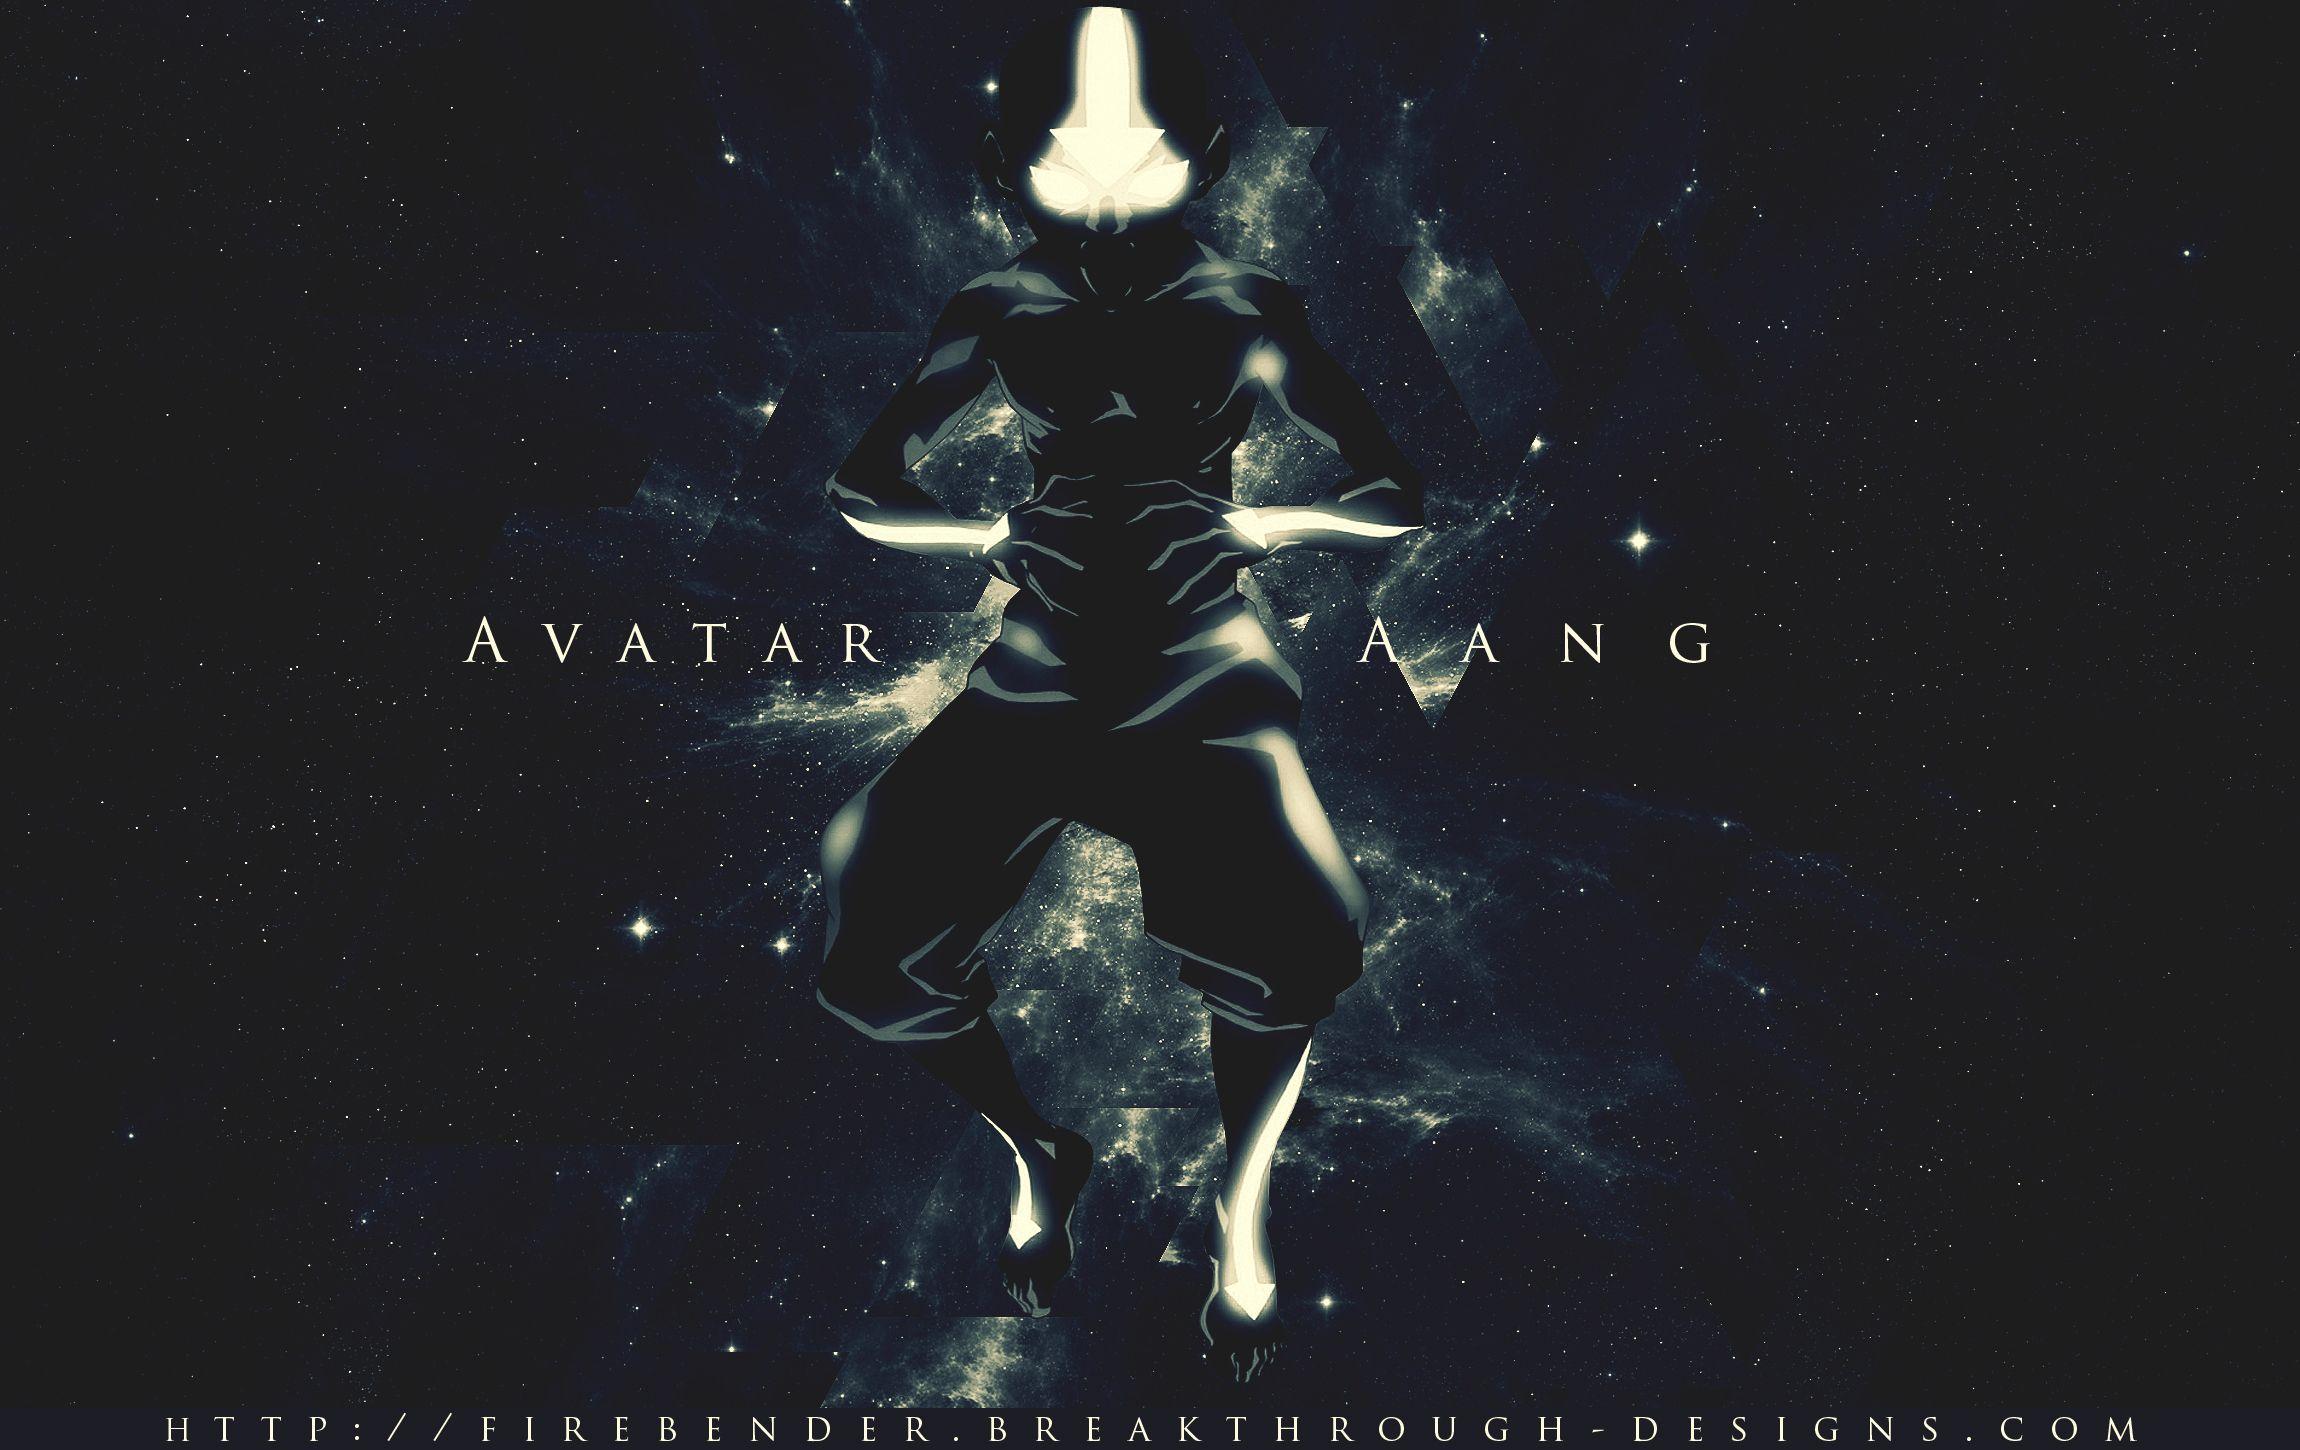 Avatar  The Last Airbender  Aang 4K wallpaper download